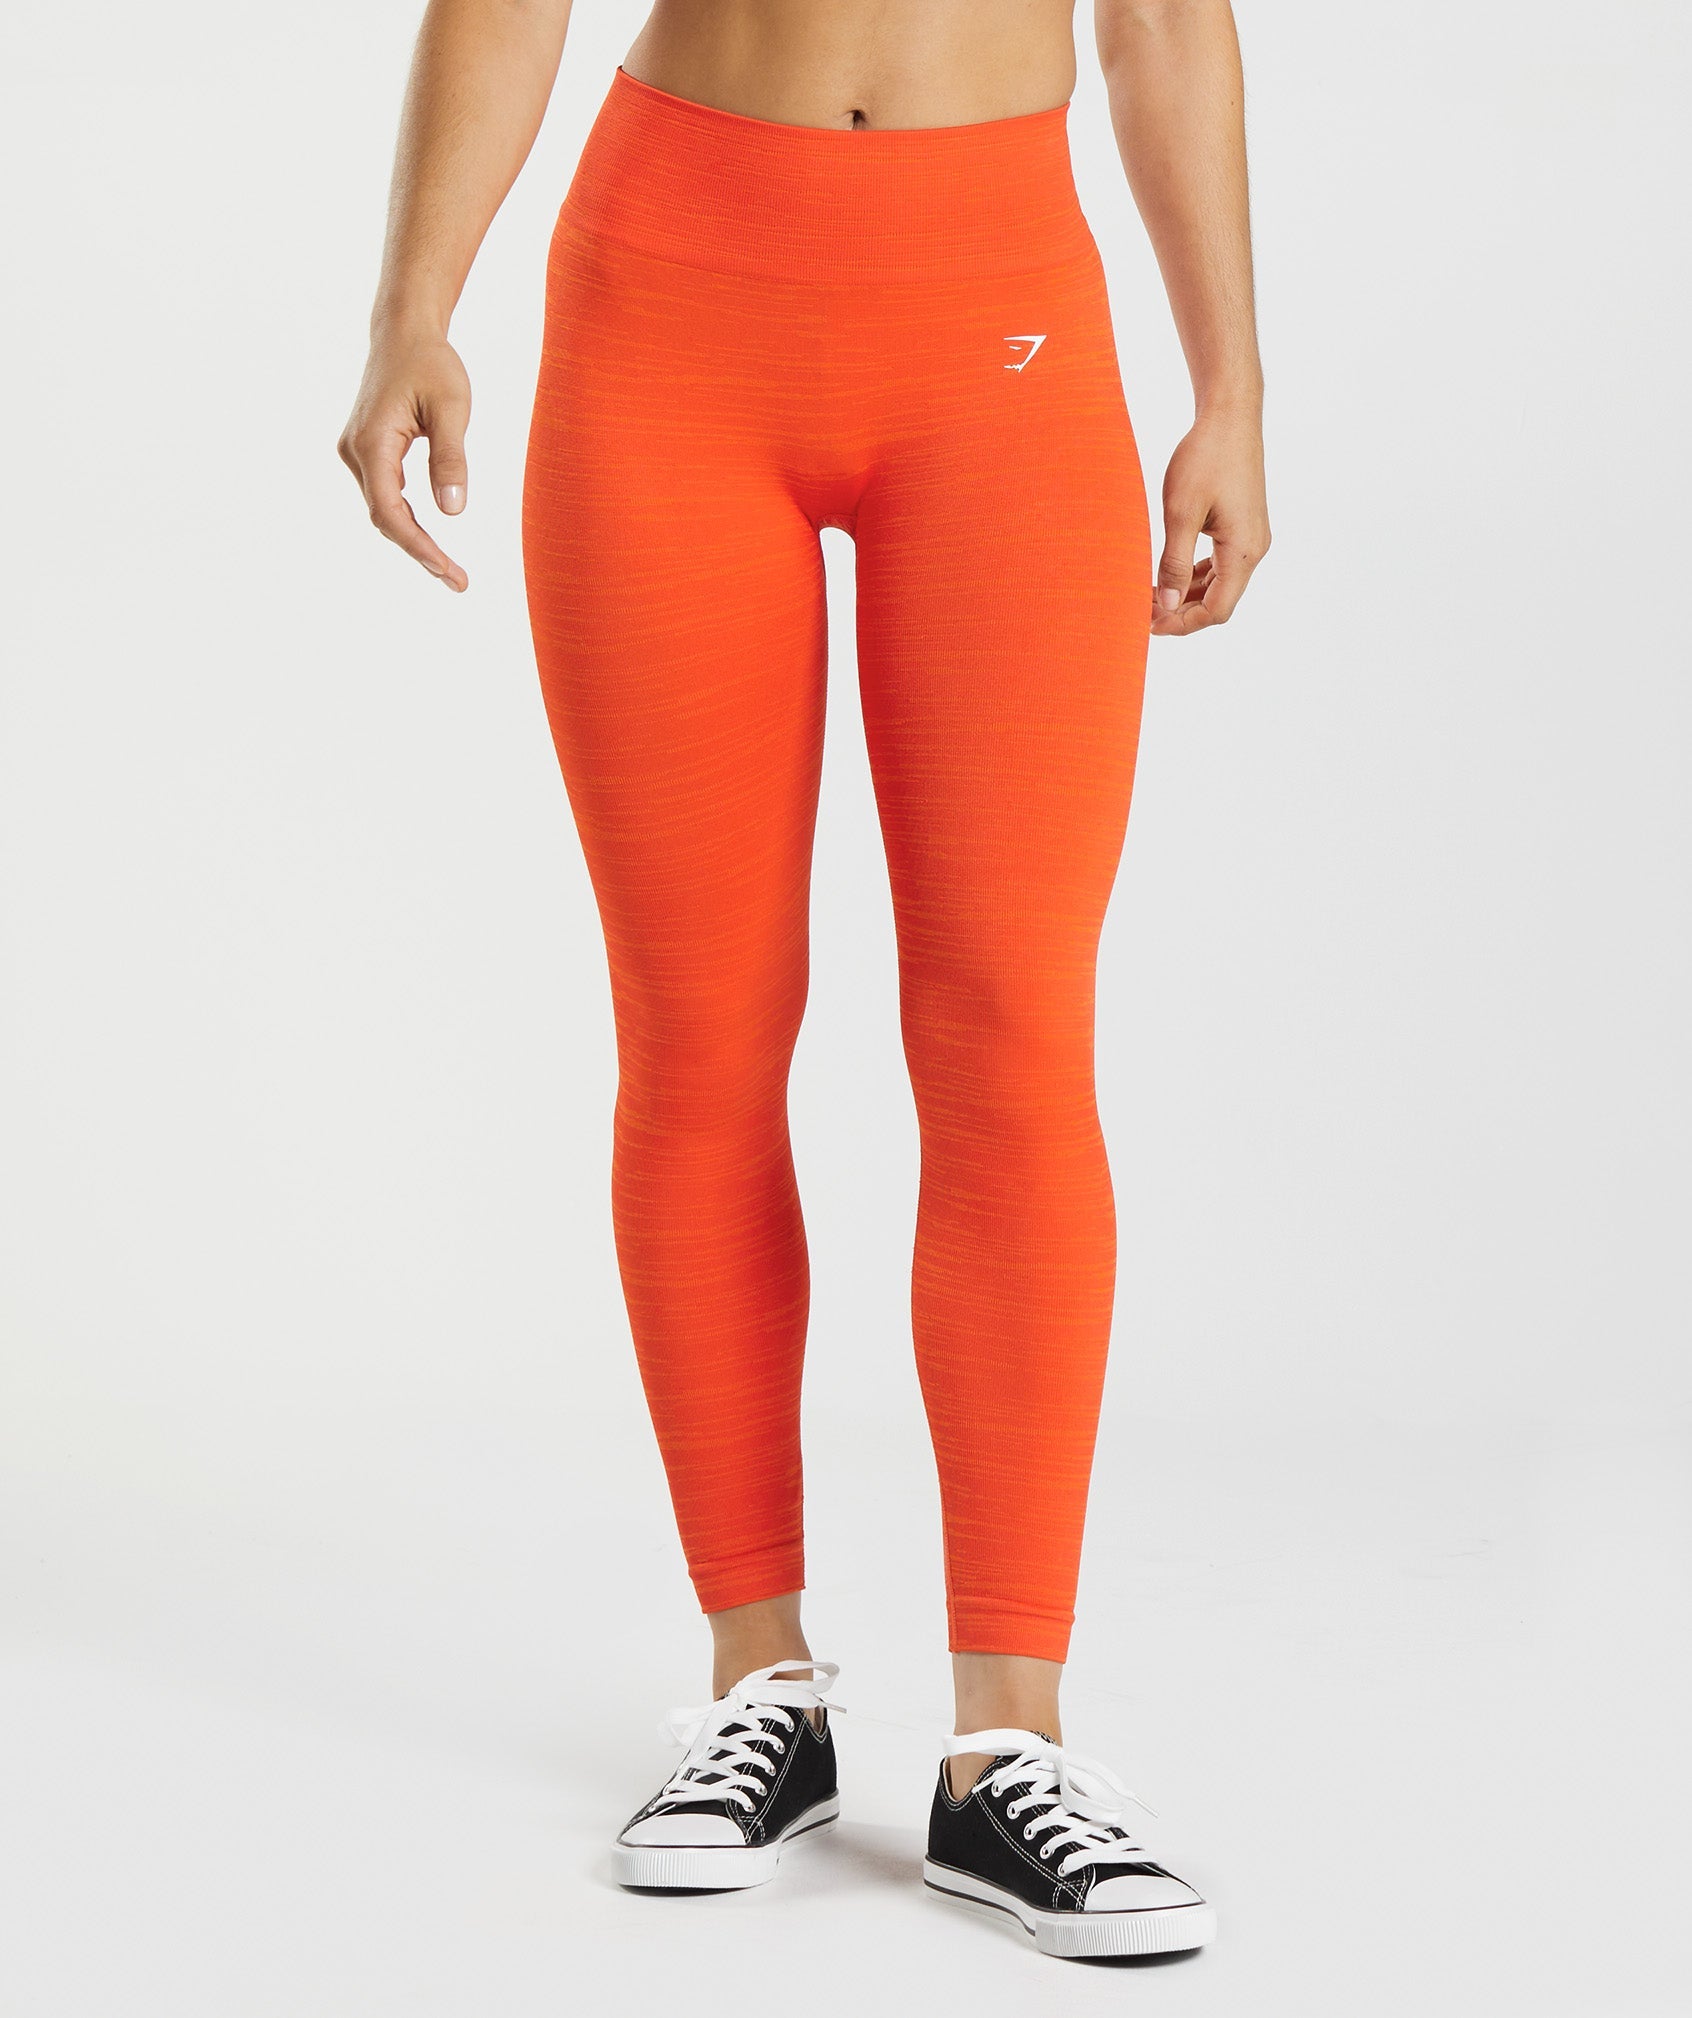 Gymshark Orange Activewear for Women for sale